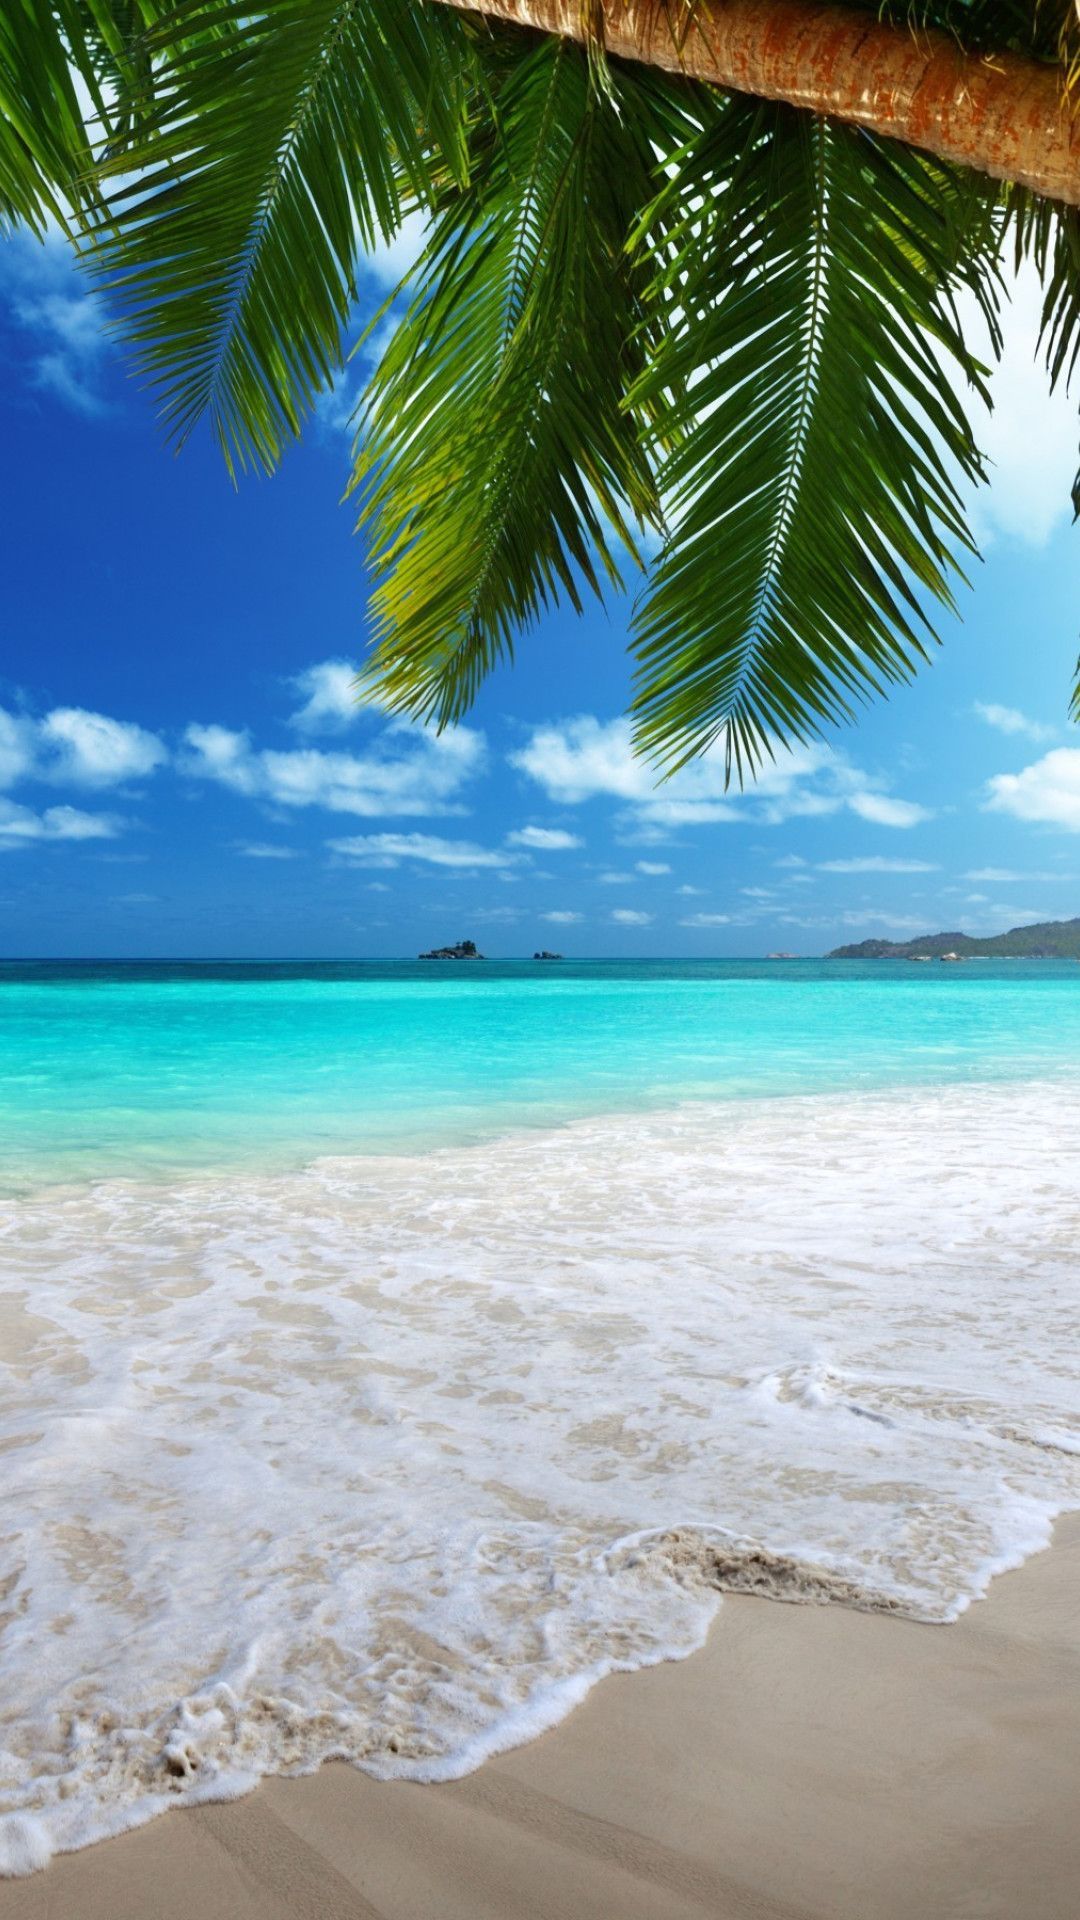 A palm tree hanging over a beautiful beach - Beach